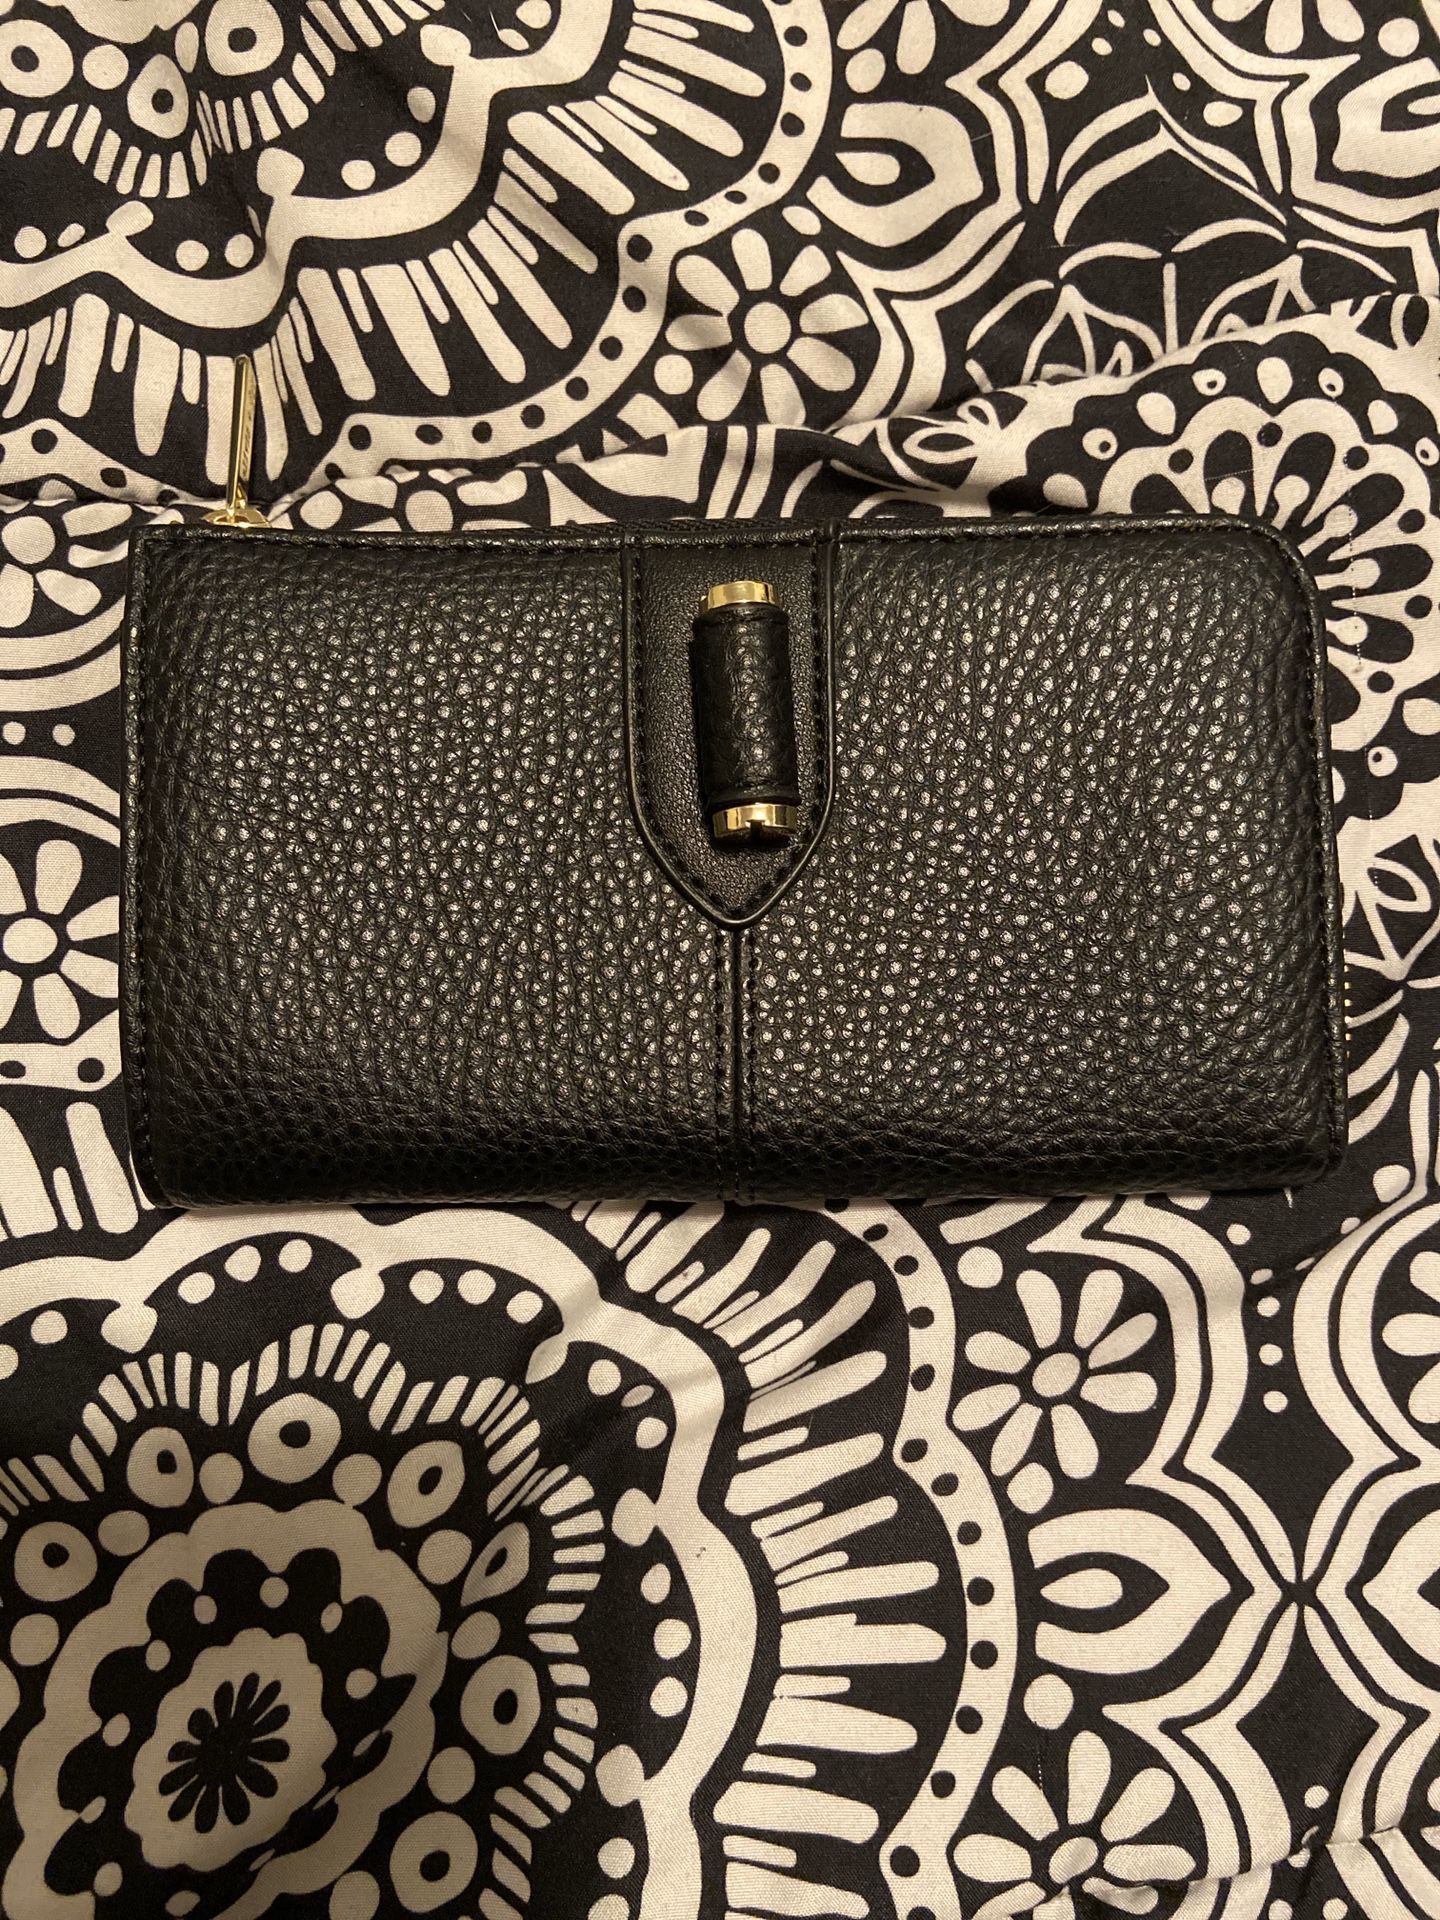 Like new Olivia + Joy leather wallet $10